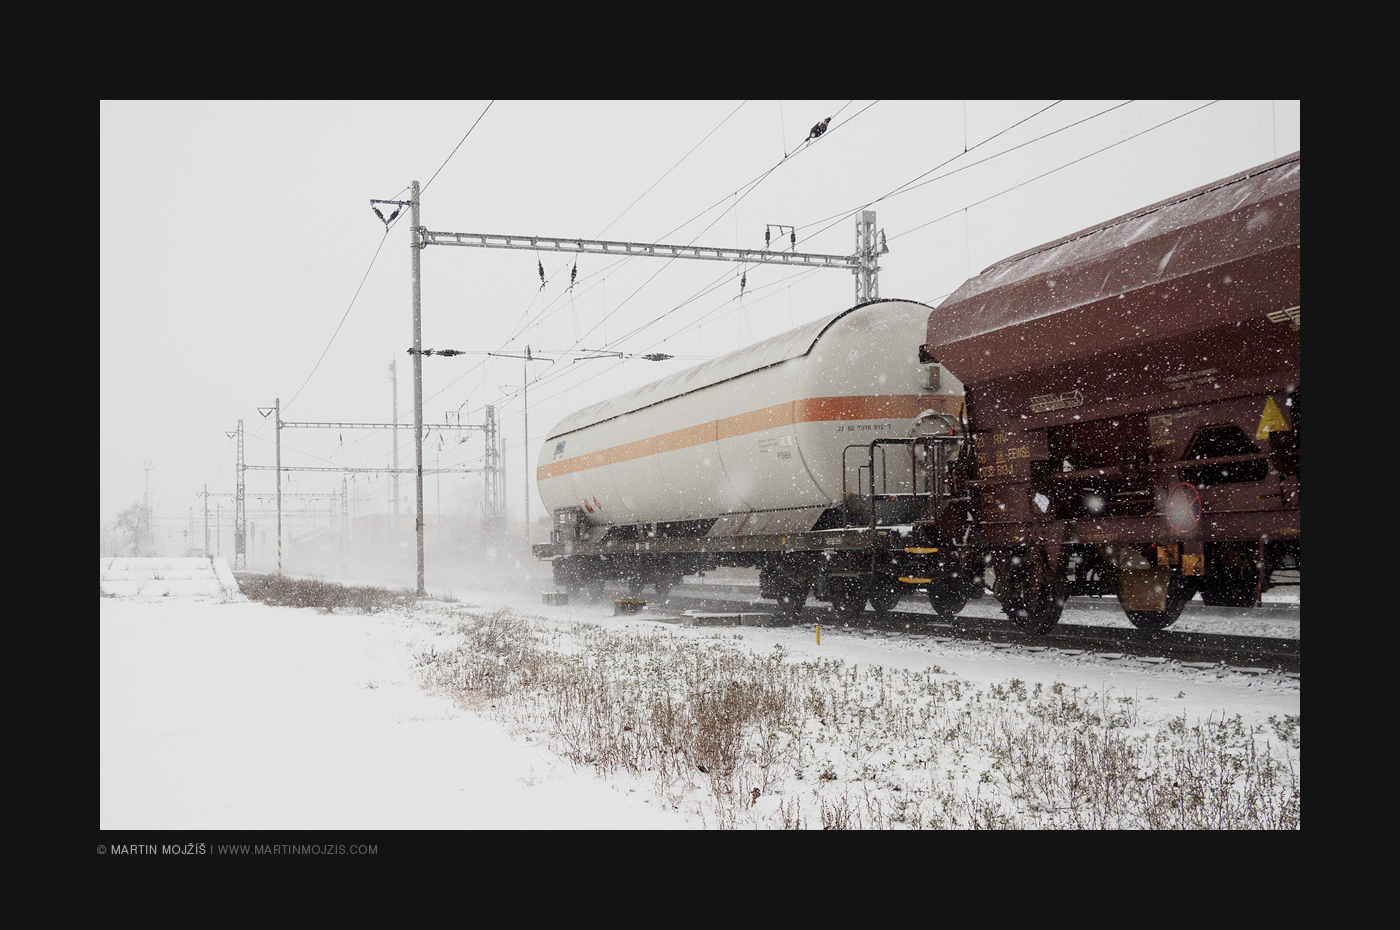 Freight train in snow blizzard.